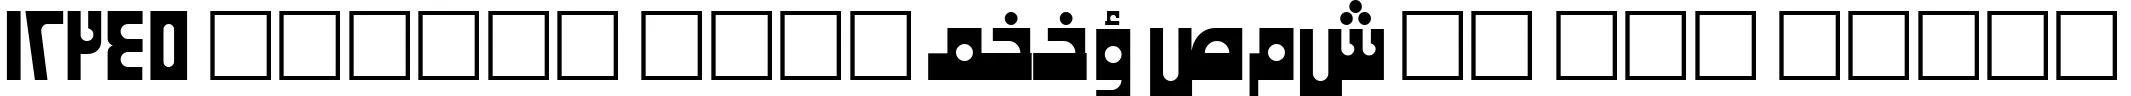 Dynamic ALW Cool Khaybar Font Preview https://safirsoft.com